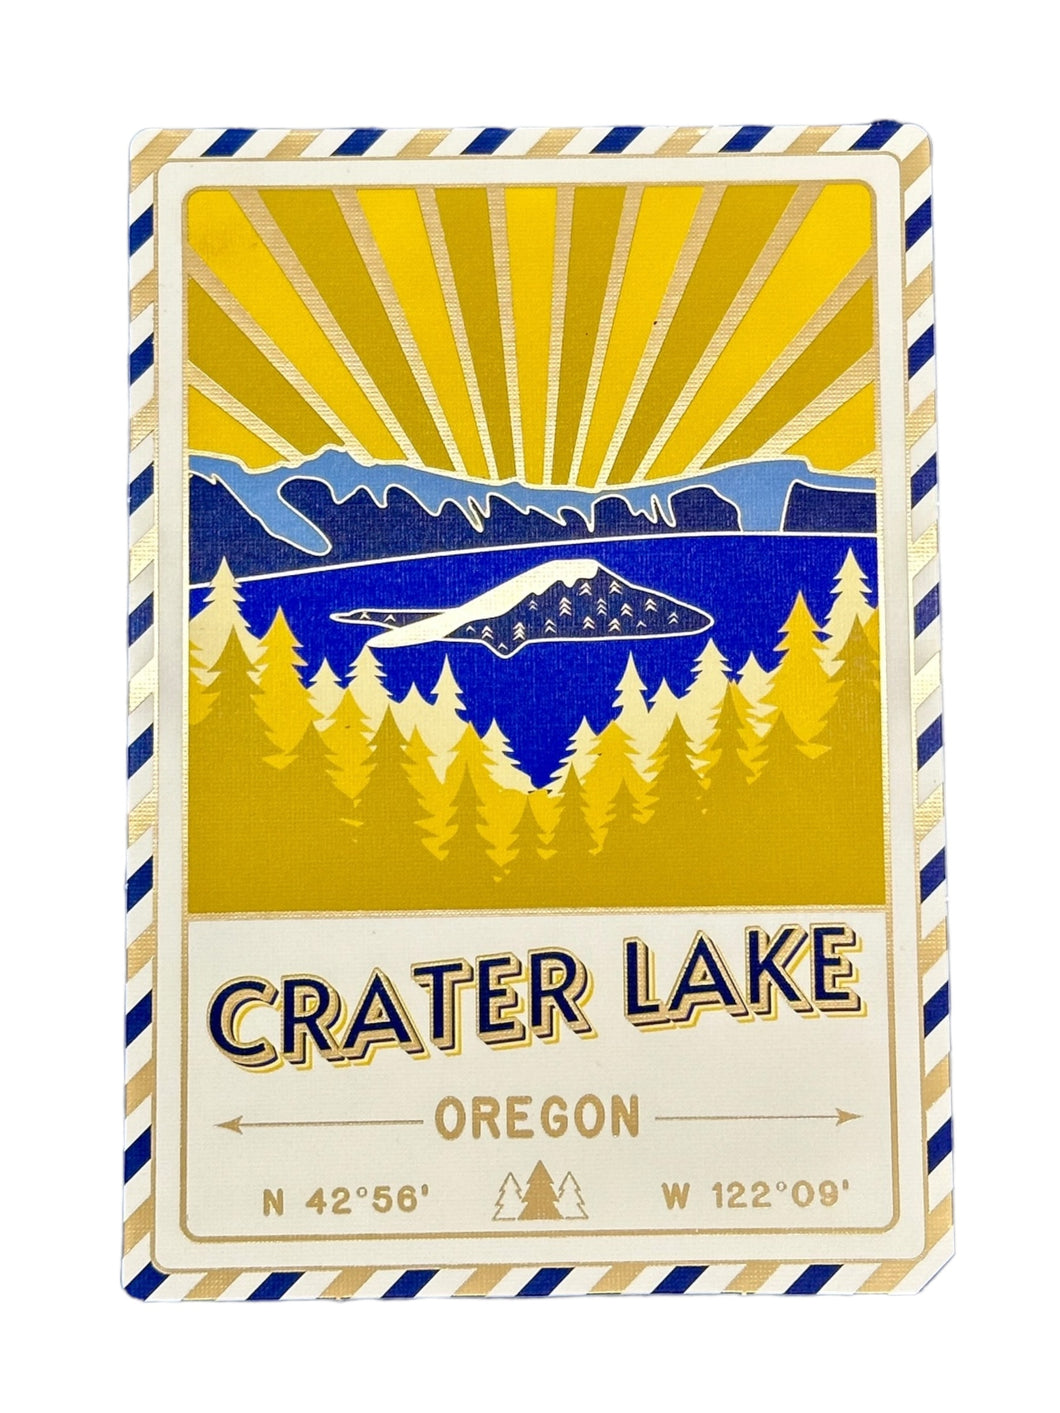 Crater Lake - Oregon - Postcard - Textured Foil